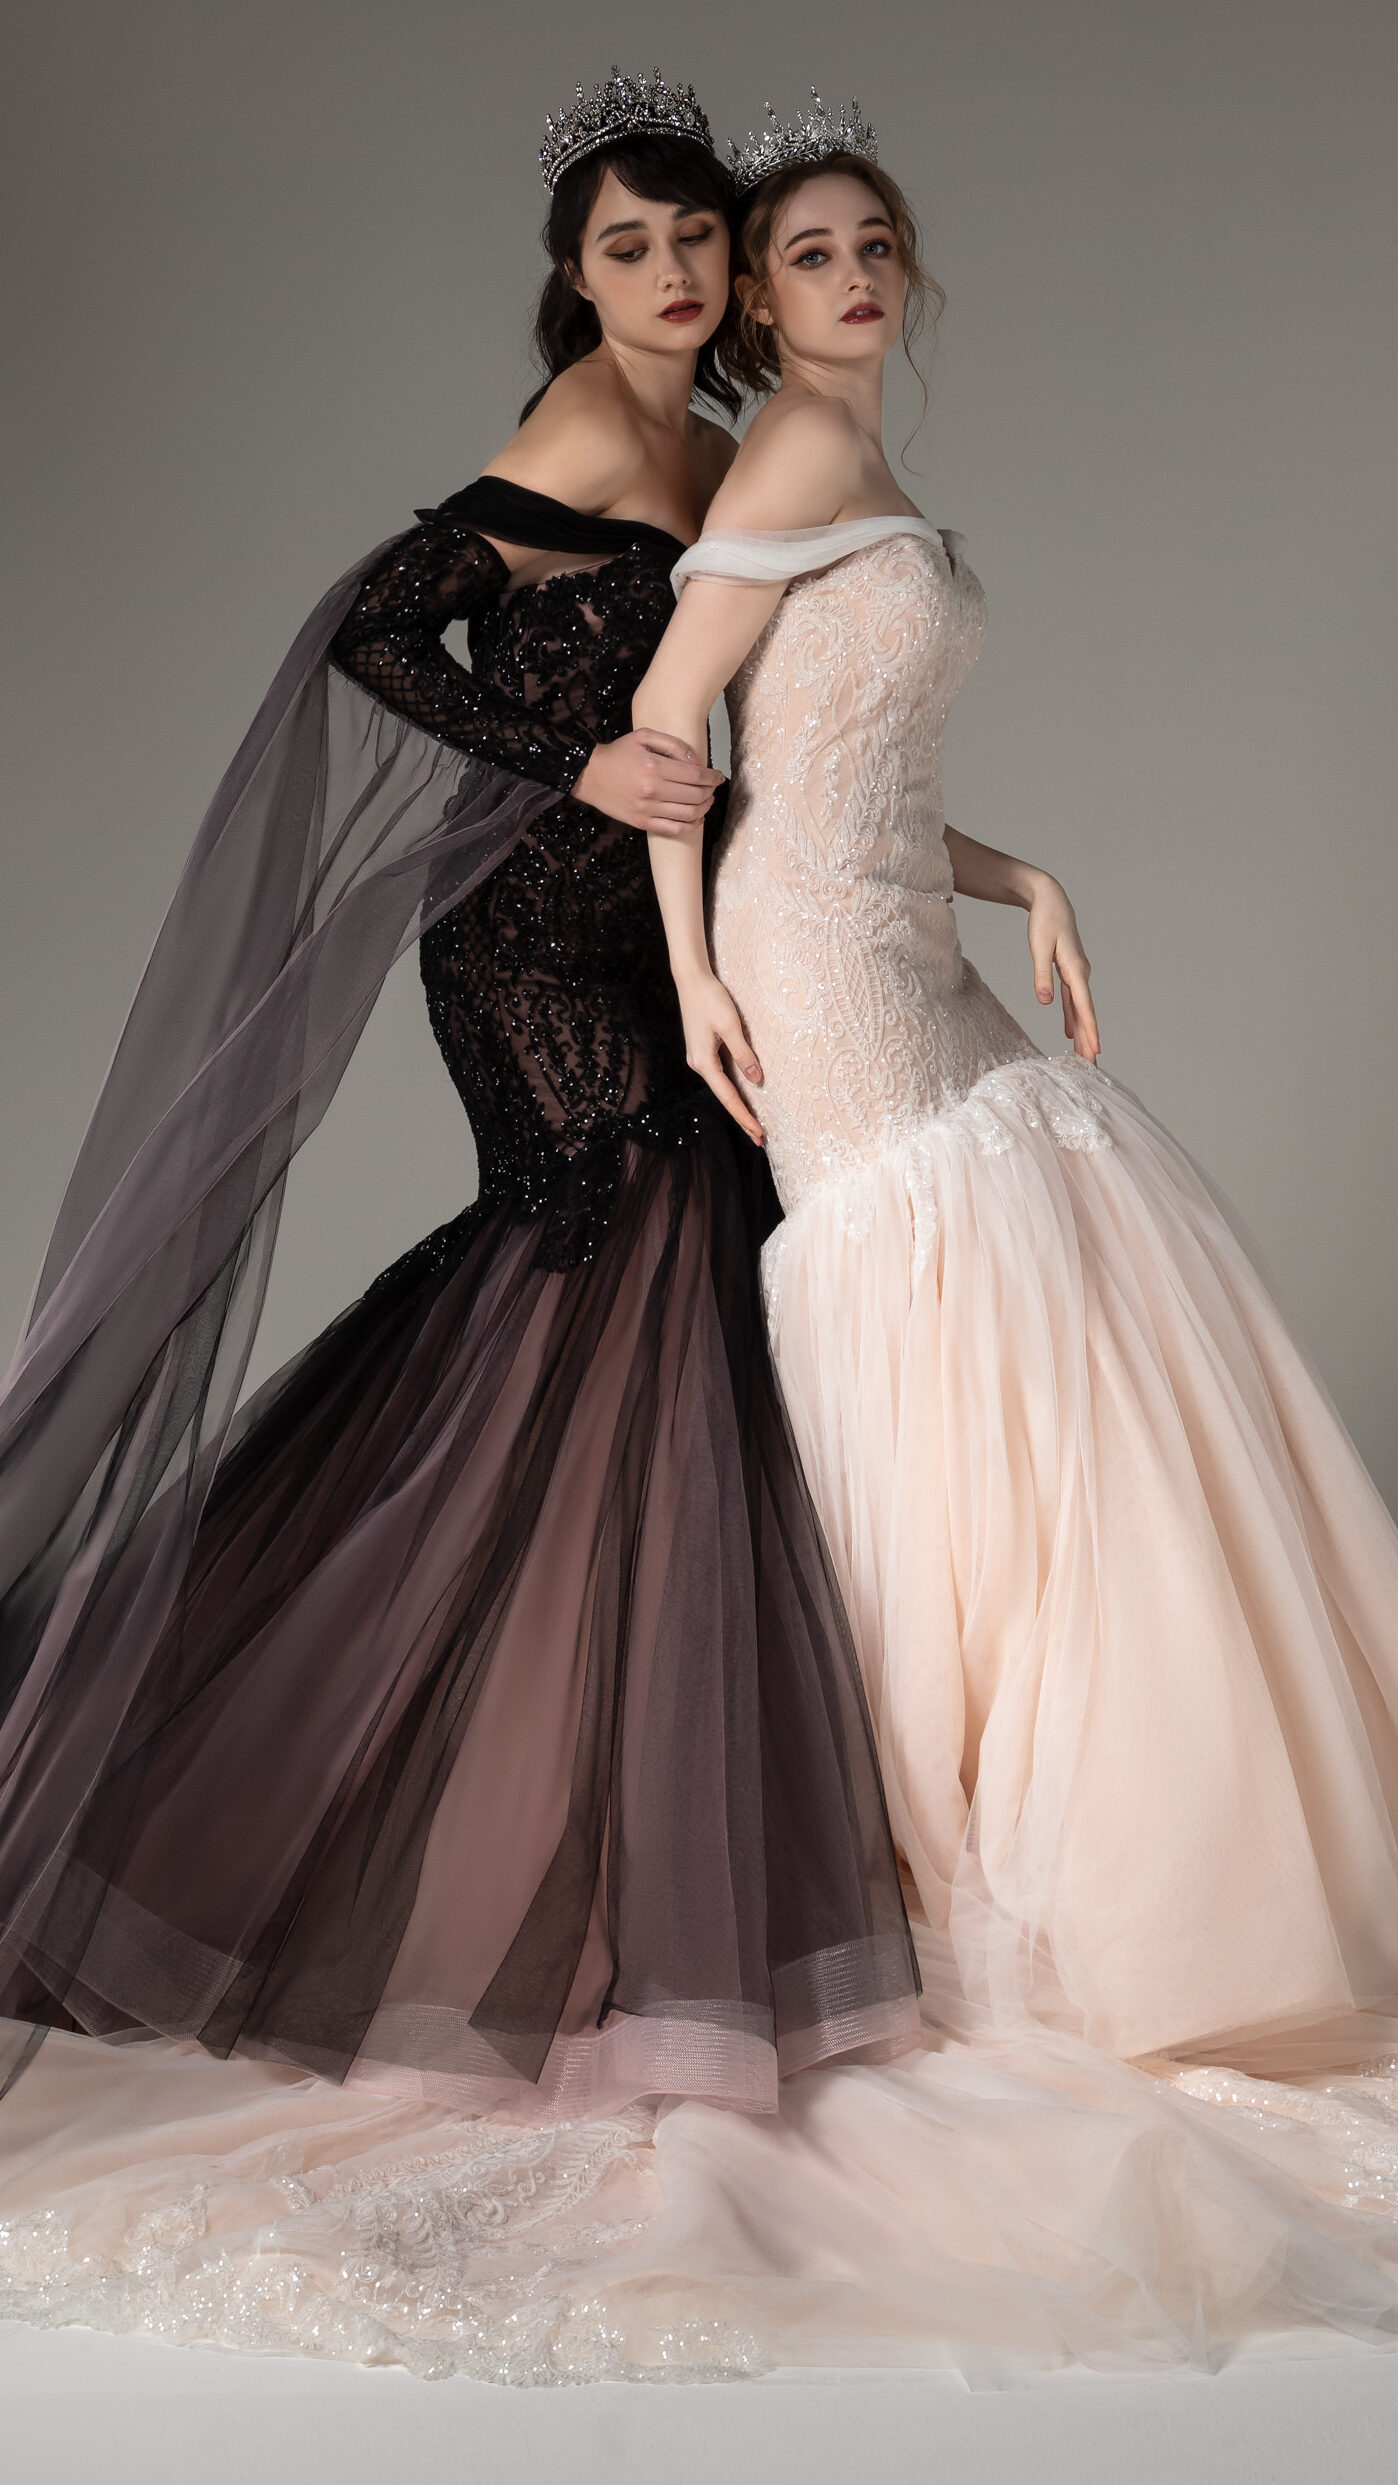 Black and pink Wedding Dresses by Cocomelody 2022 - CW2508 | ALISHA + CW2509 | AZALEA